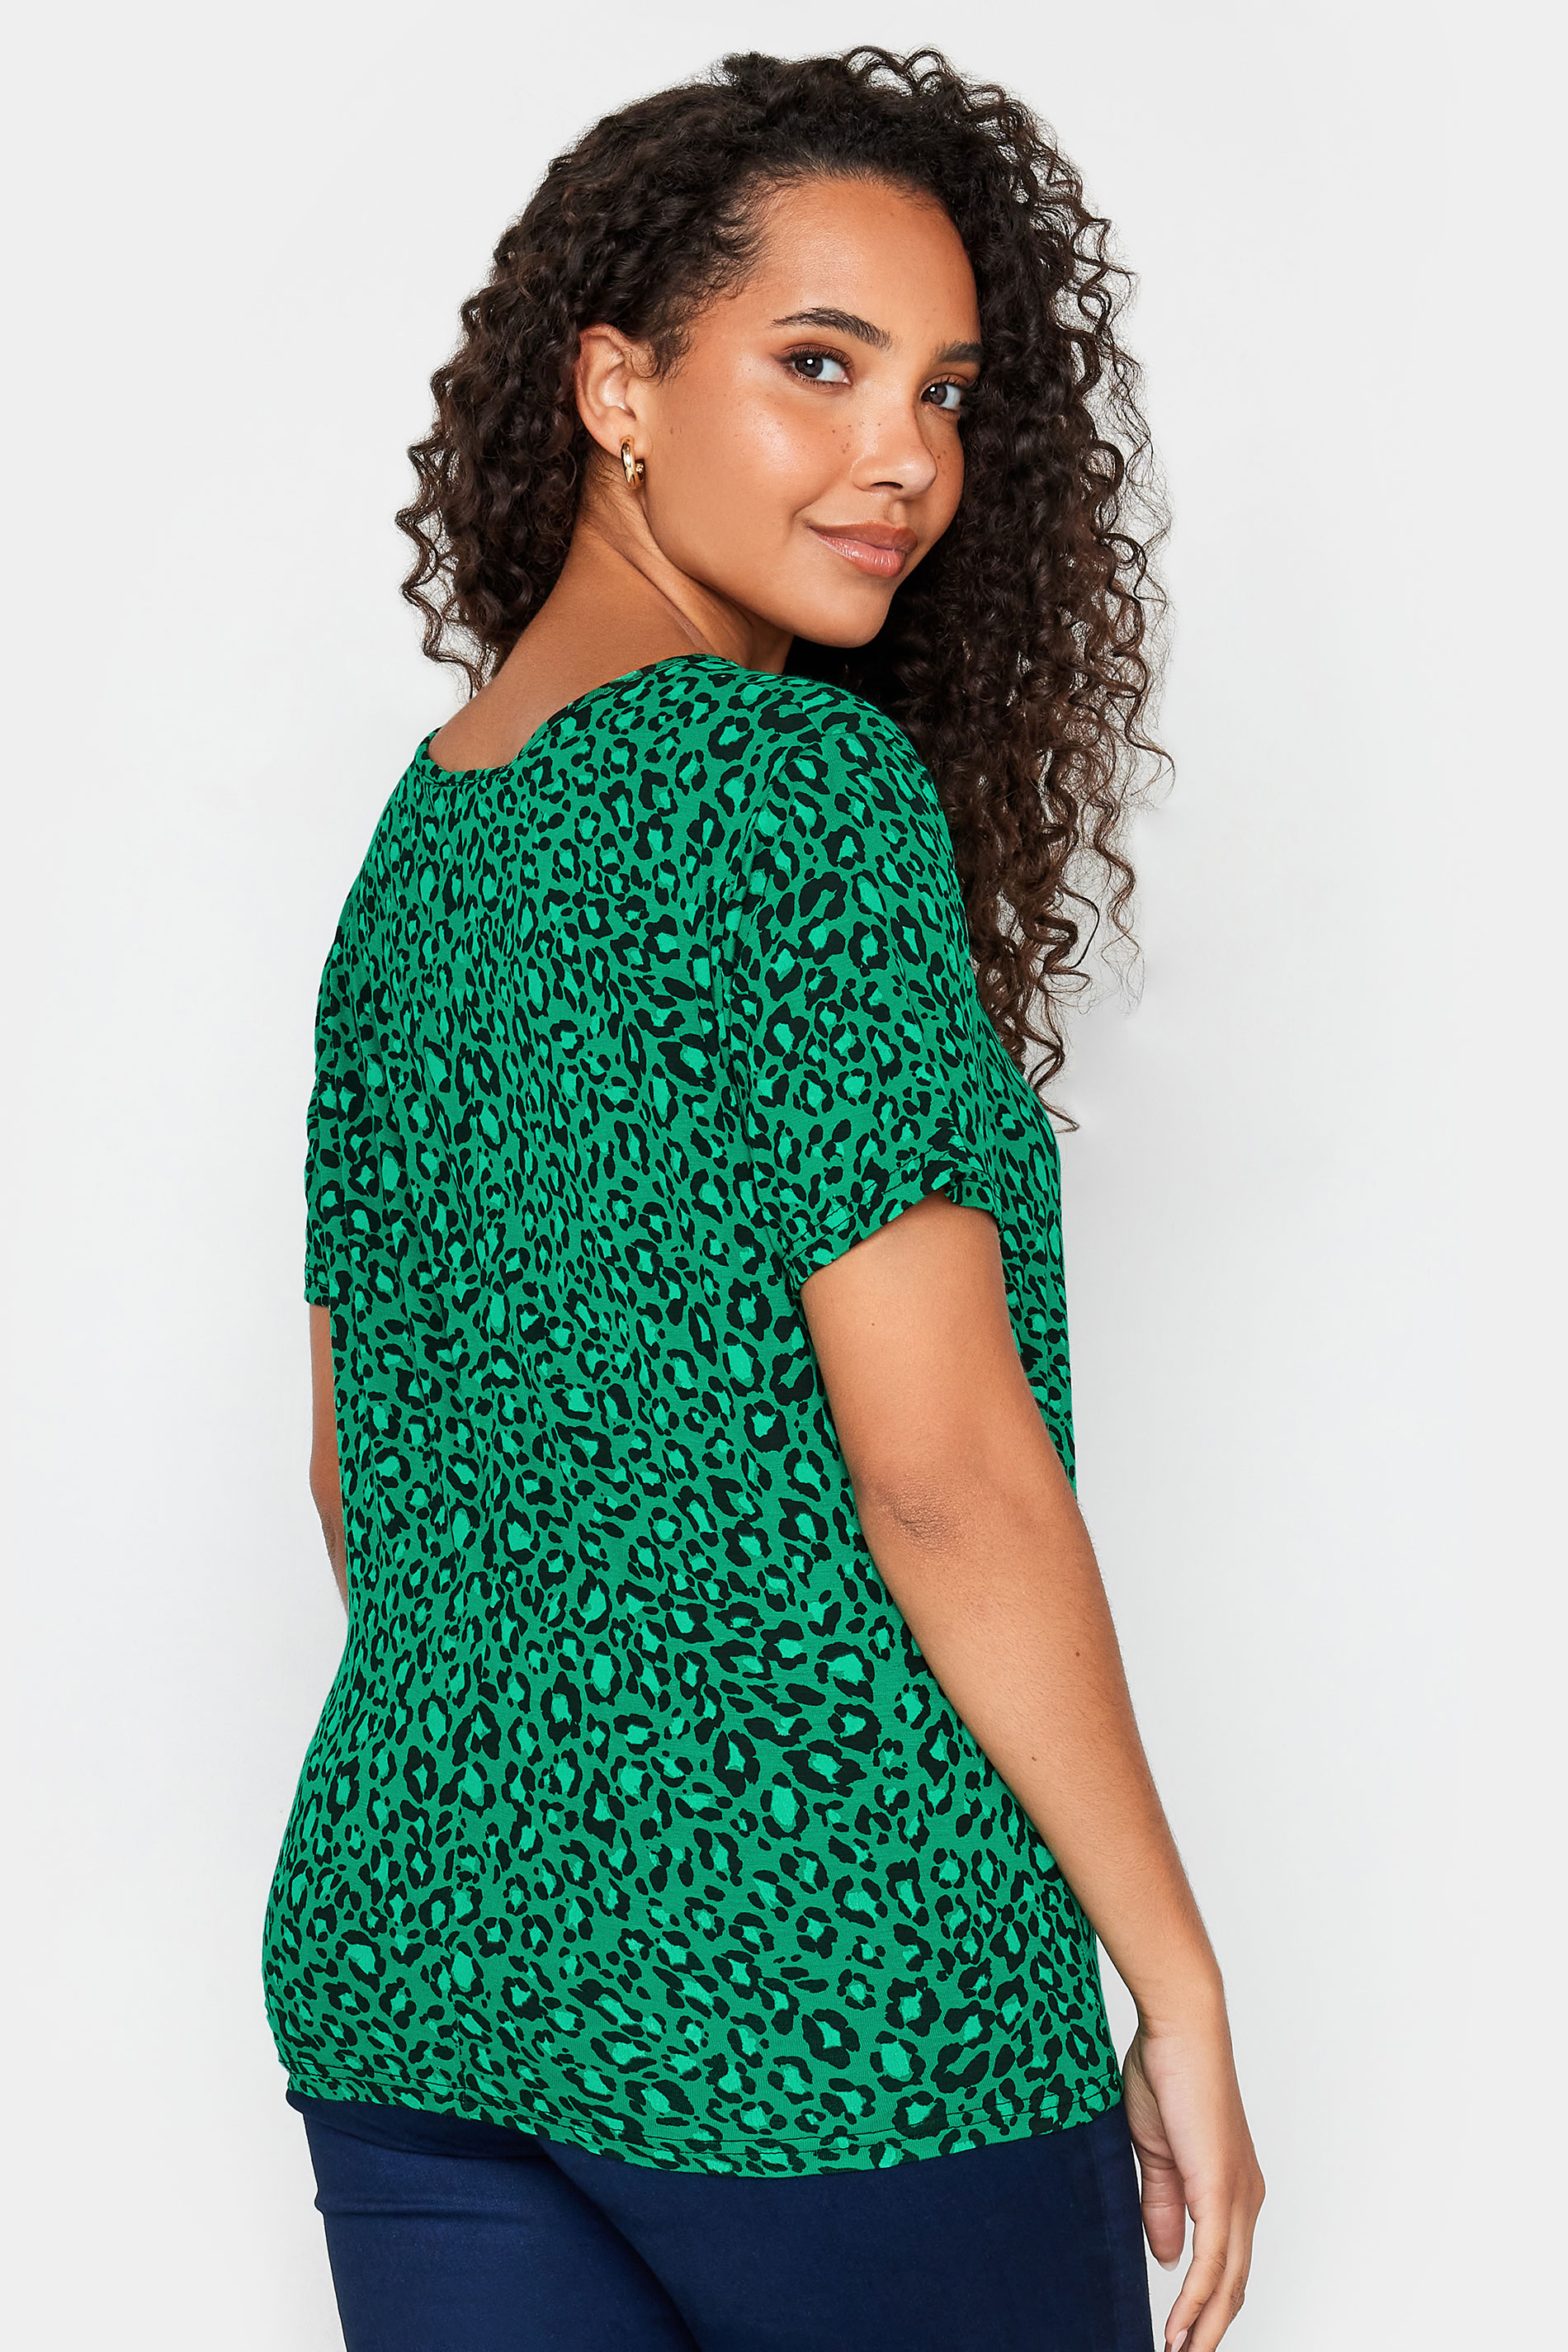 M&Co Green Leopard Print Tie Detail T-Shirt | M&Co  3